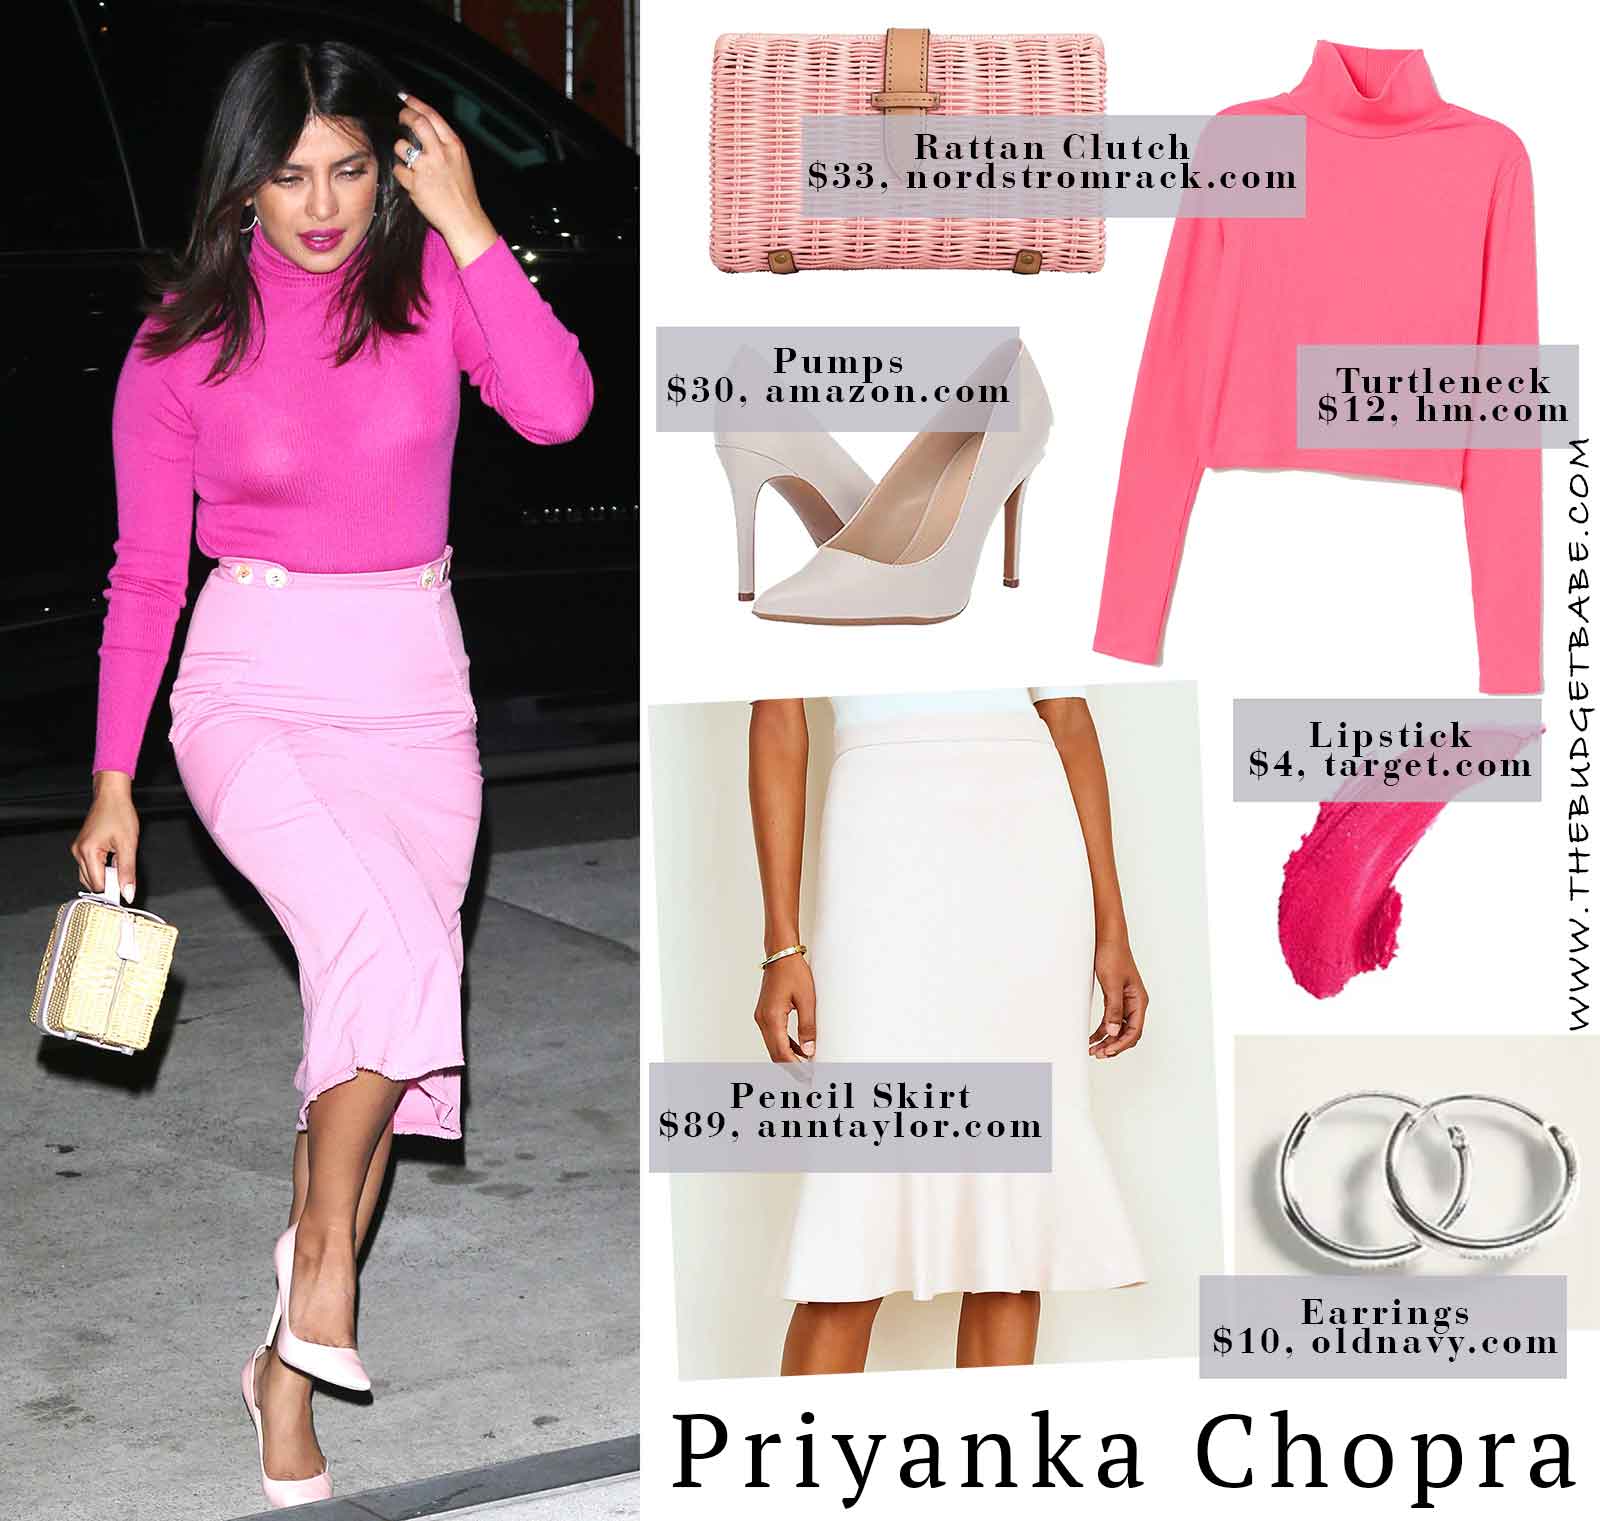 Priyanka Chopra dazzles in an all pink ensemble